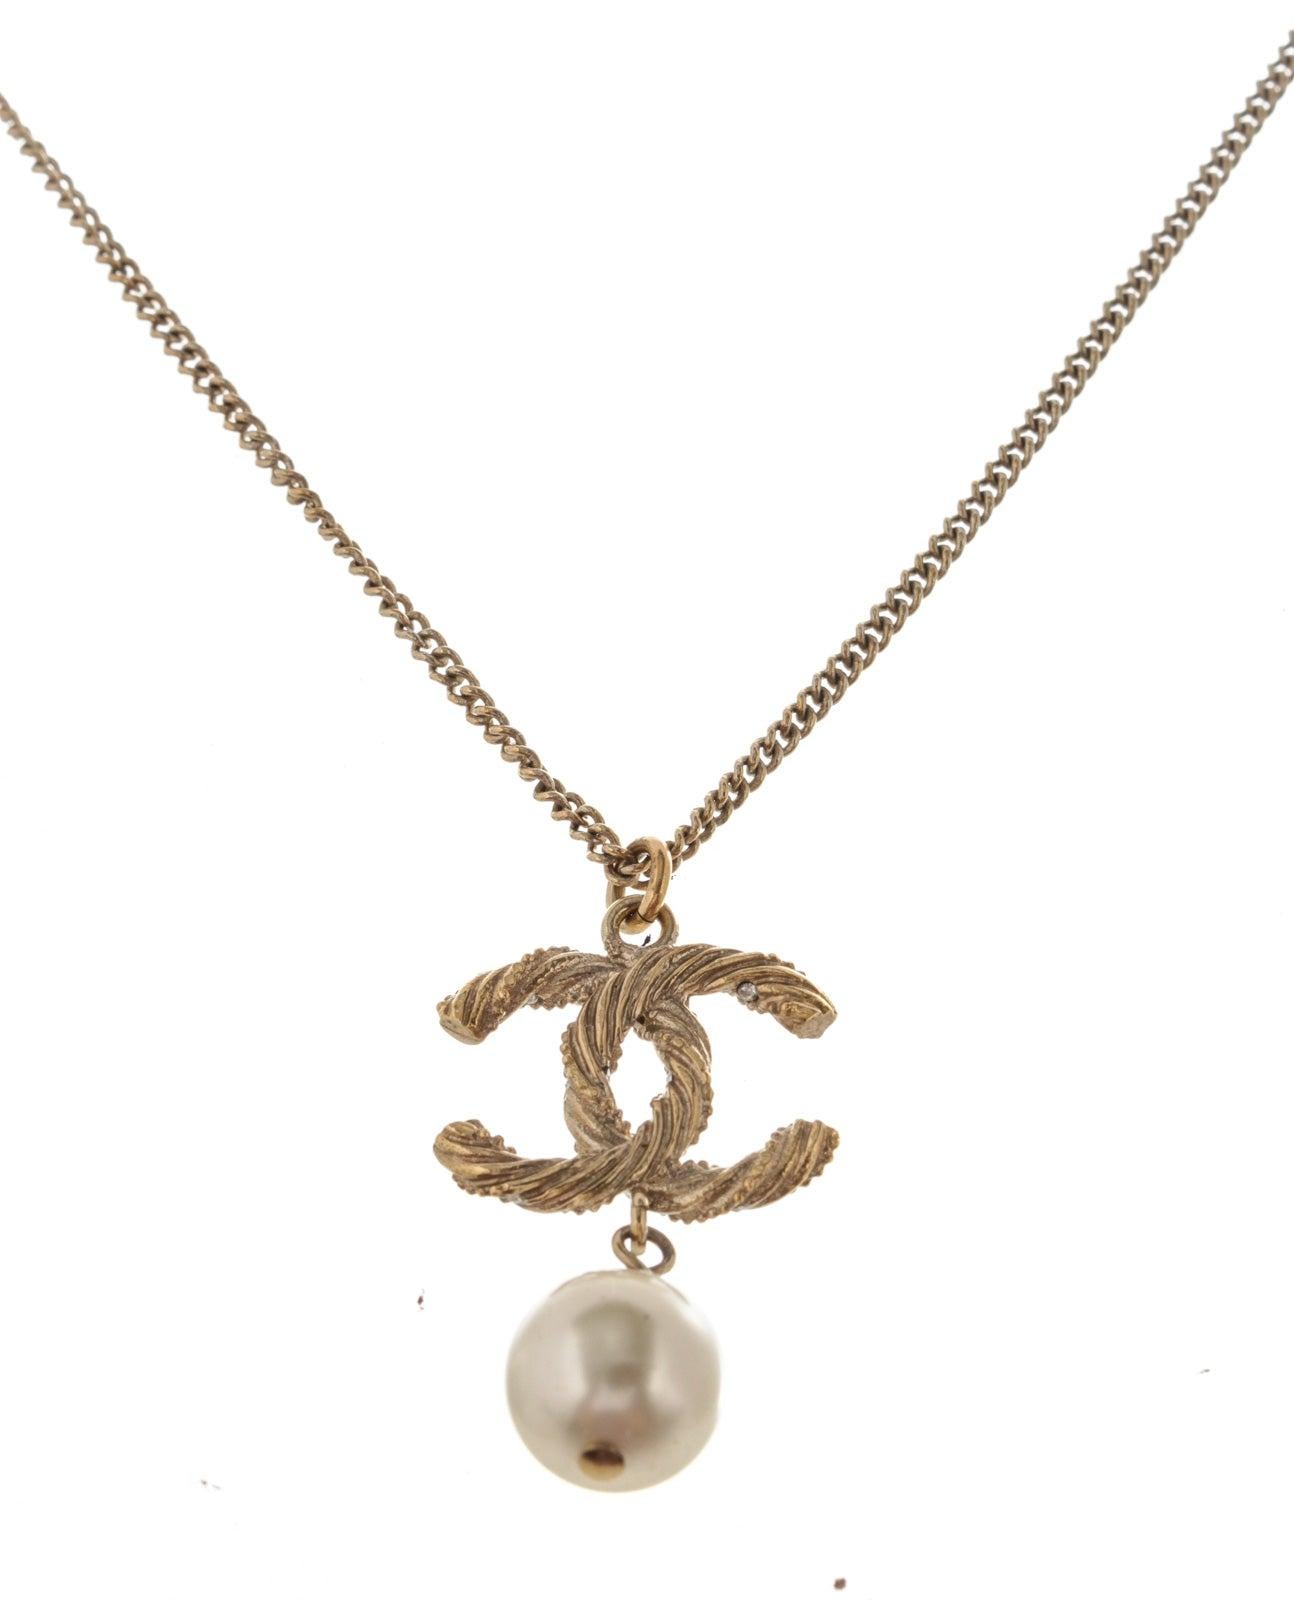 cc pearl pendant necklace